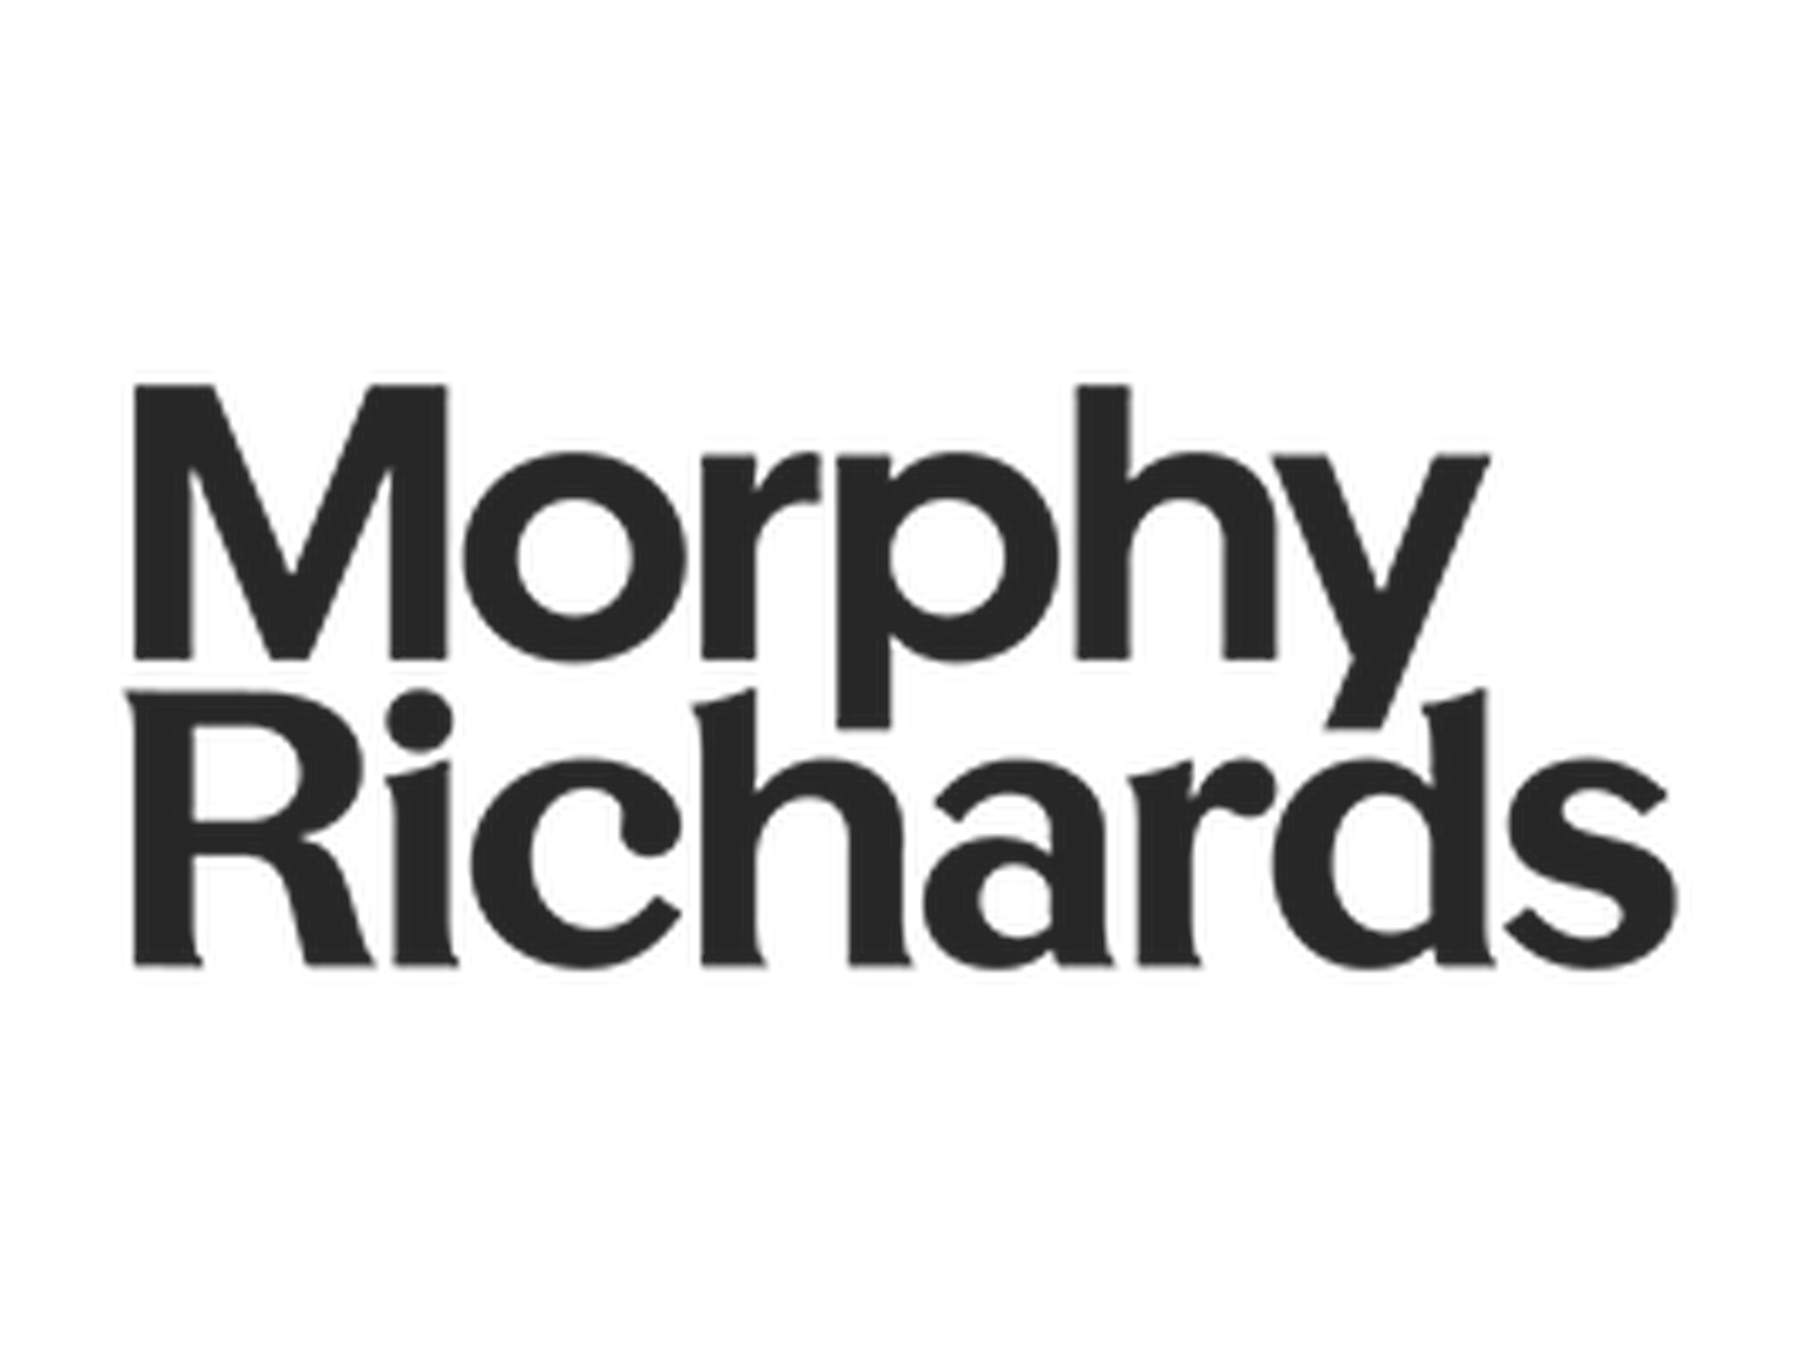 Morphy Richards discount code